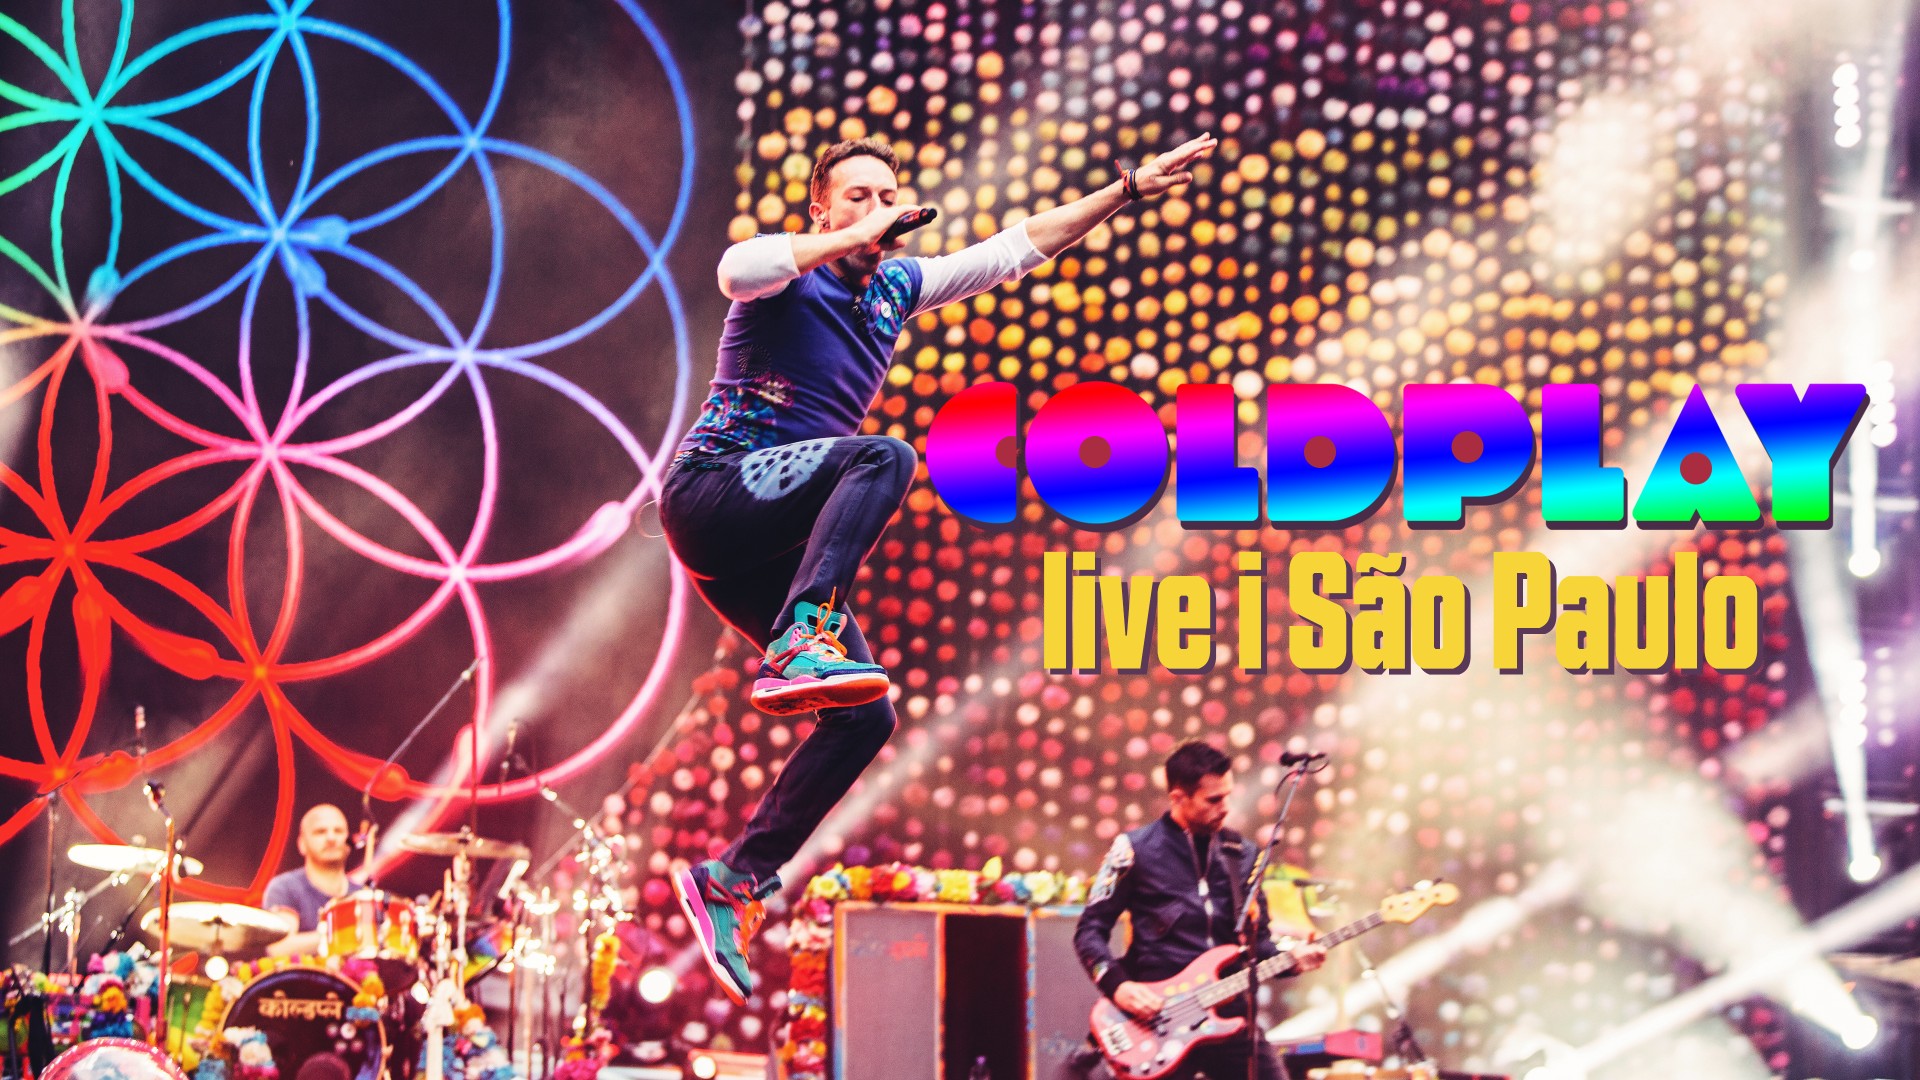 Coldplay live i São Paulo NRK TV